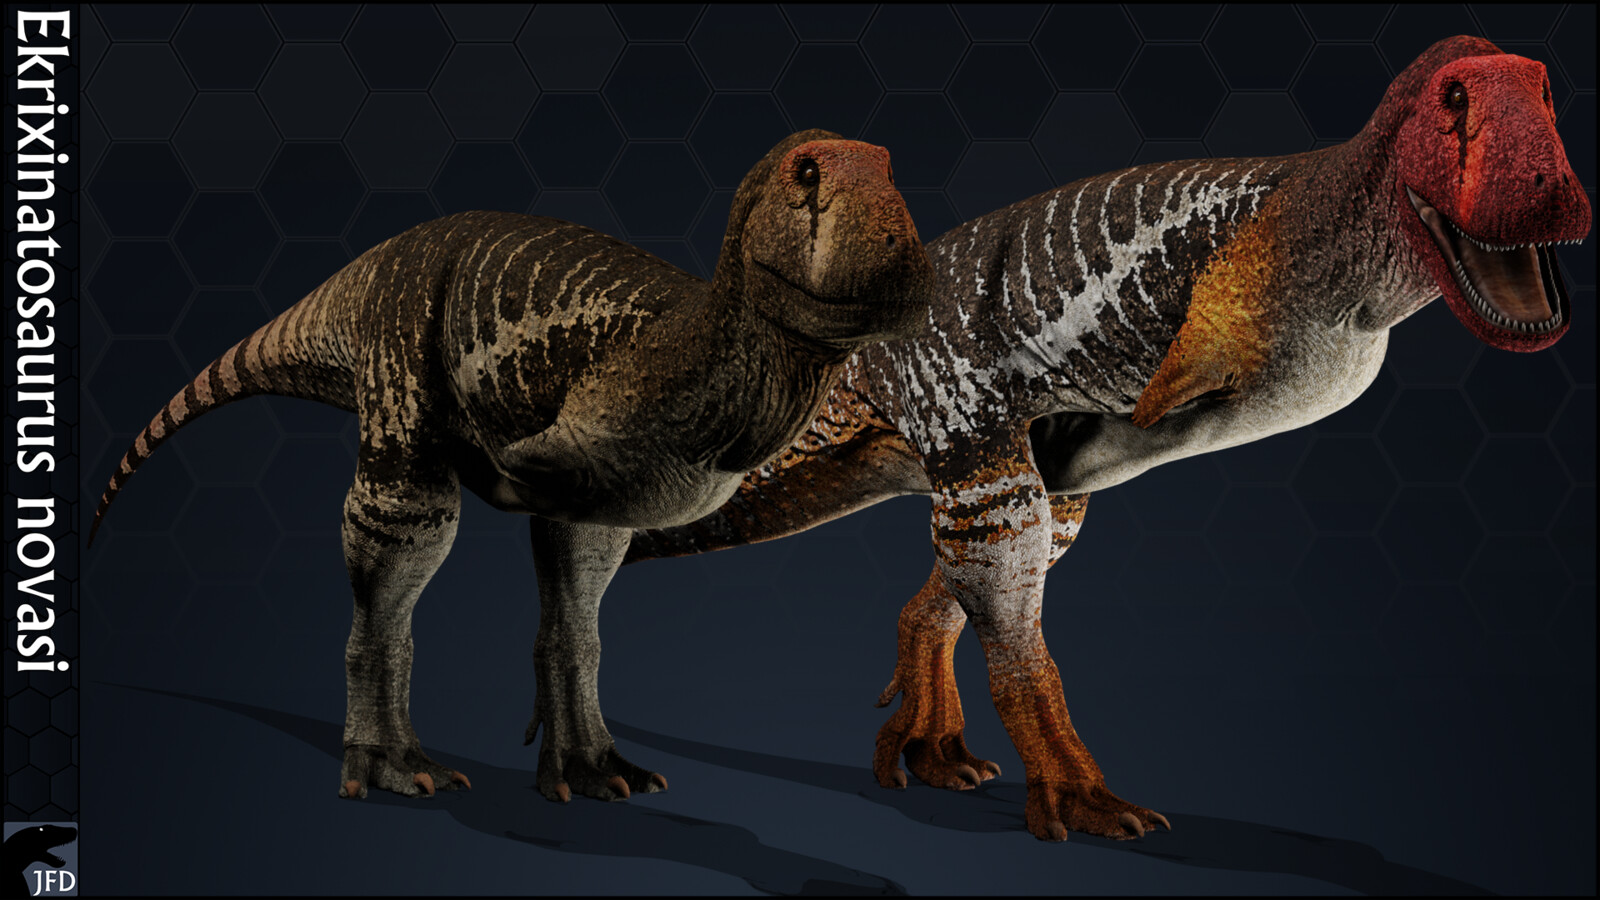 Ekrixinatosaurus novasi male (right) and female (left) alt skin 1, Gryphon.